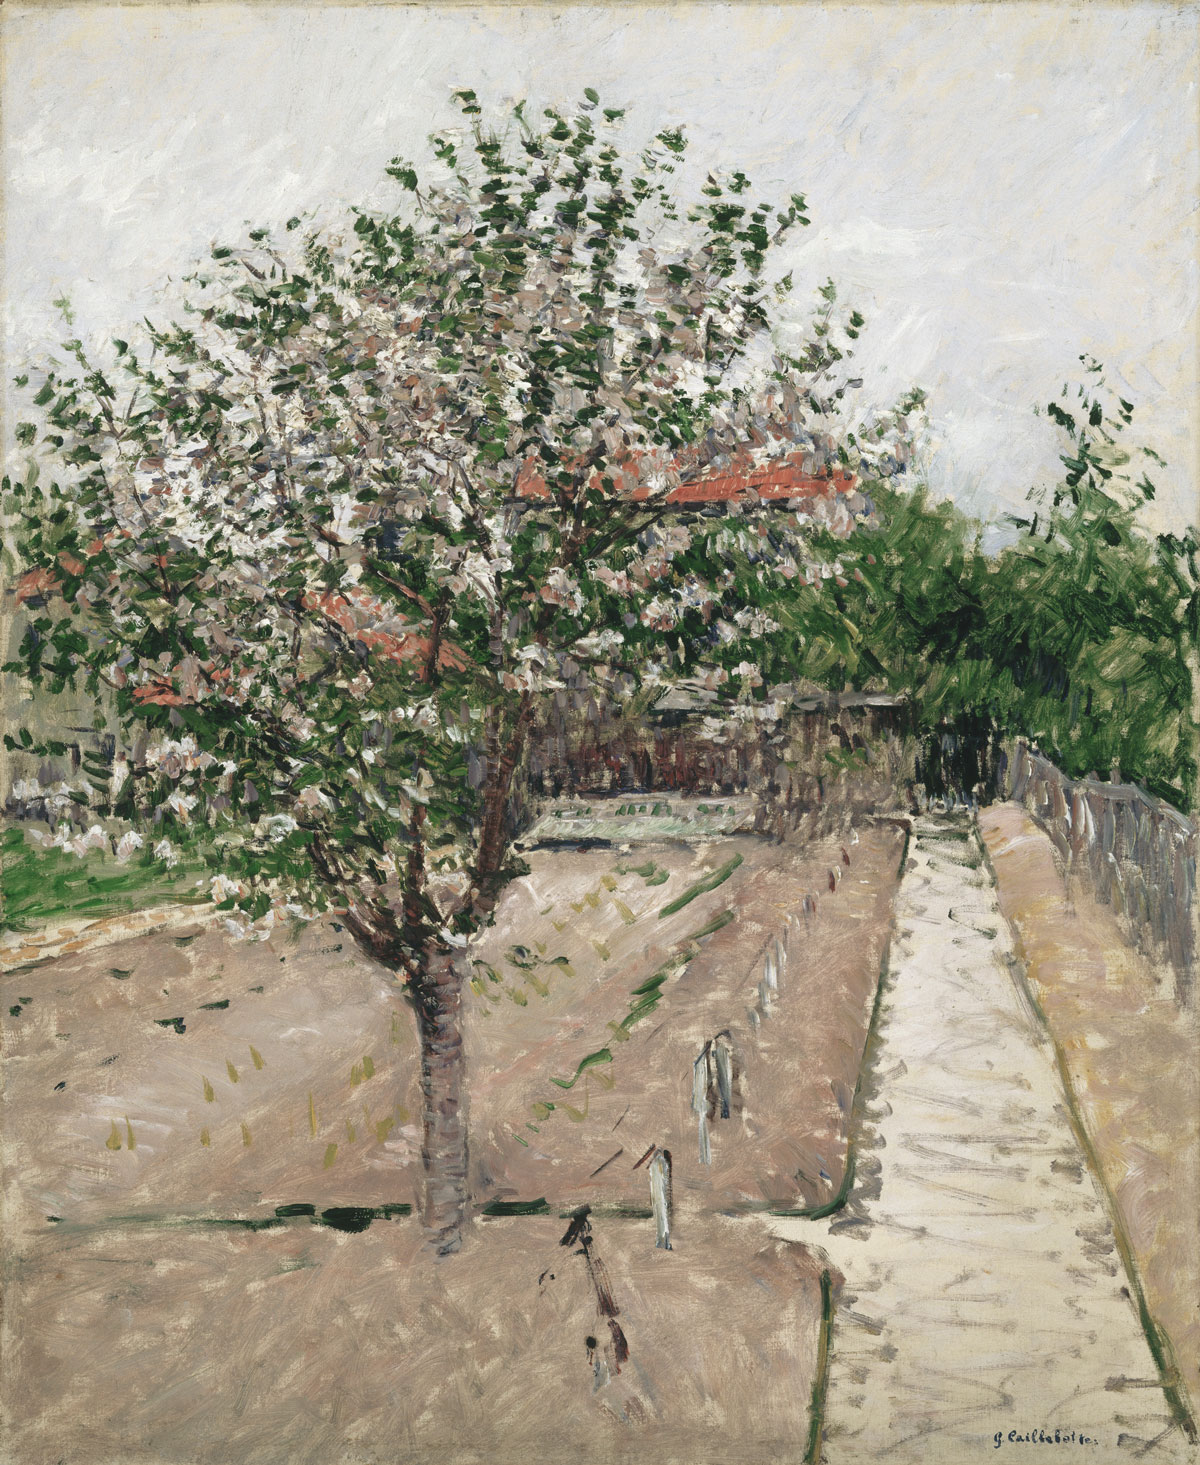 Impressionist painting of an apple tree